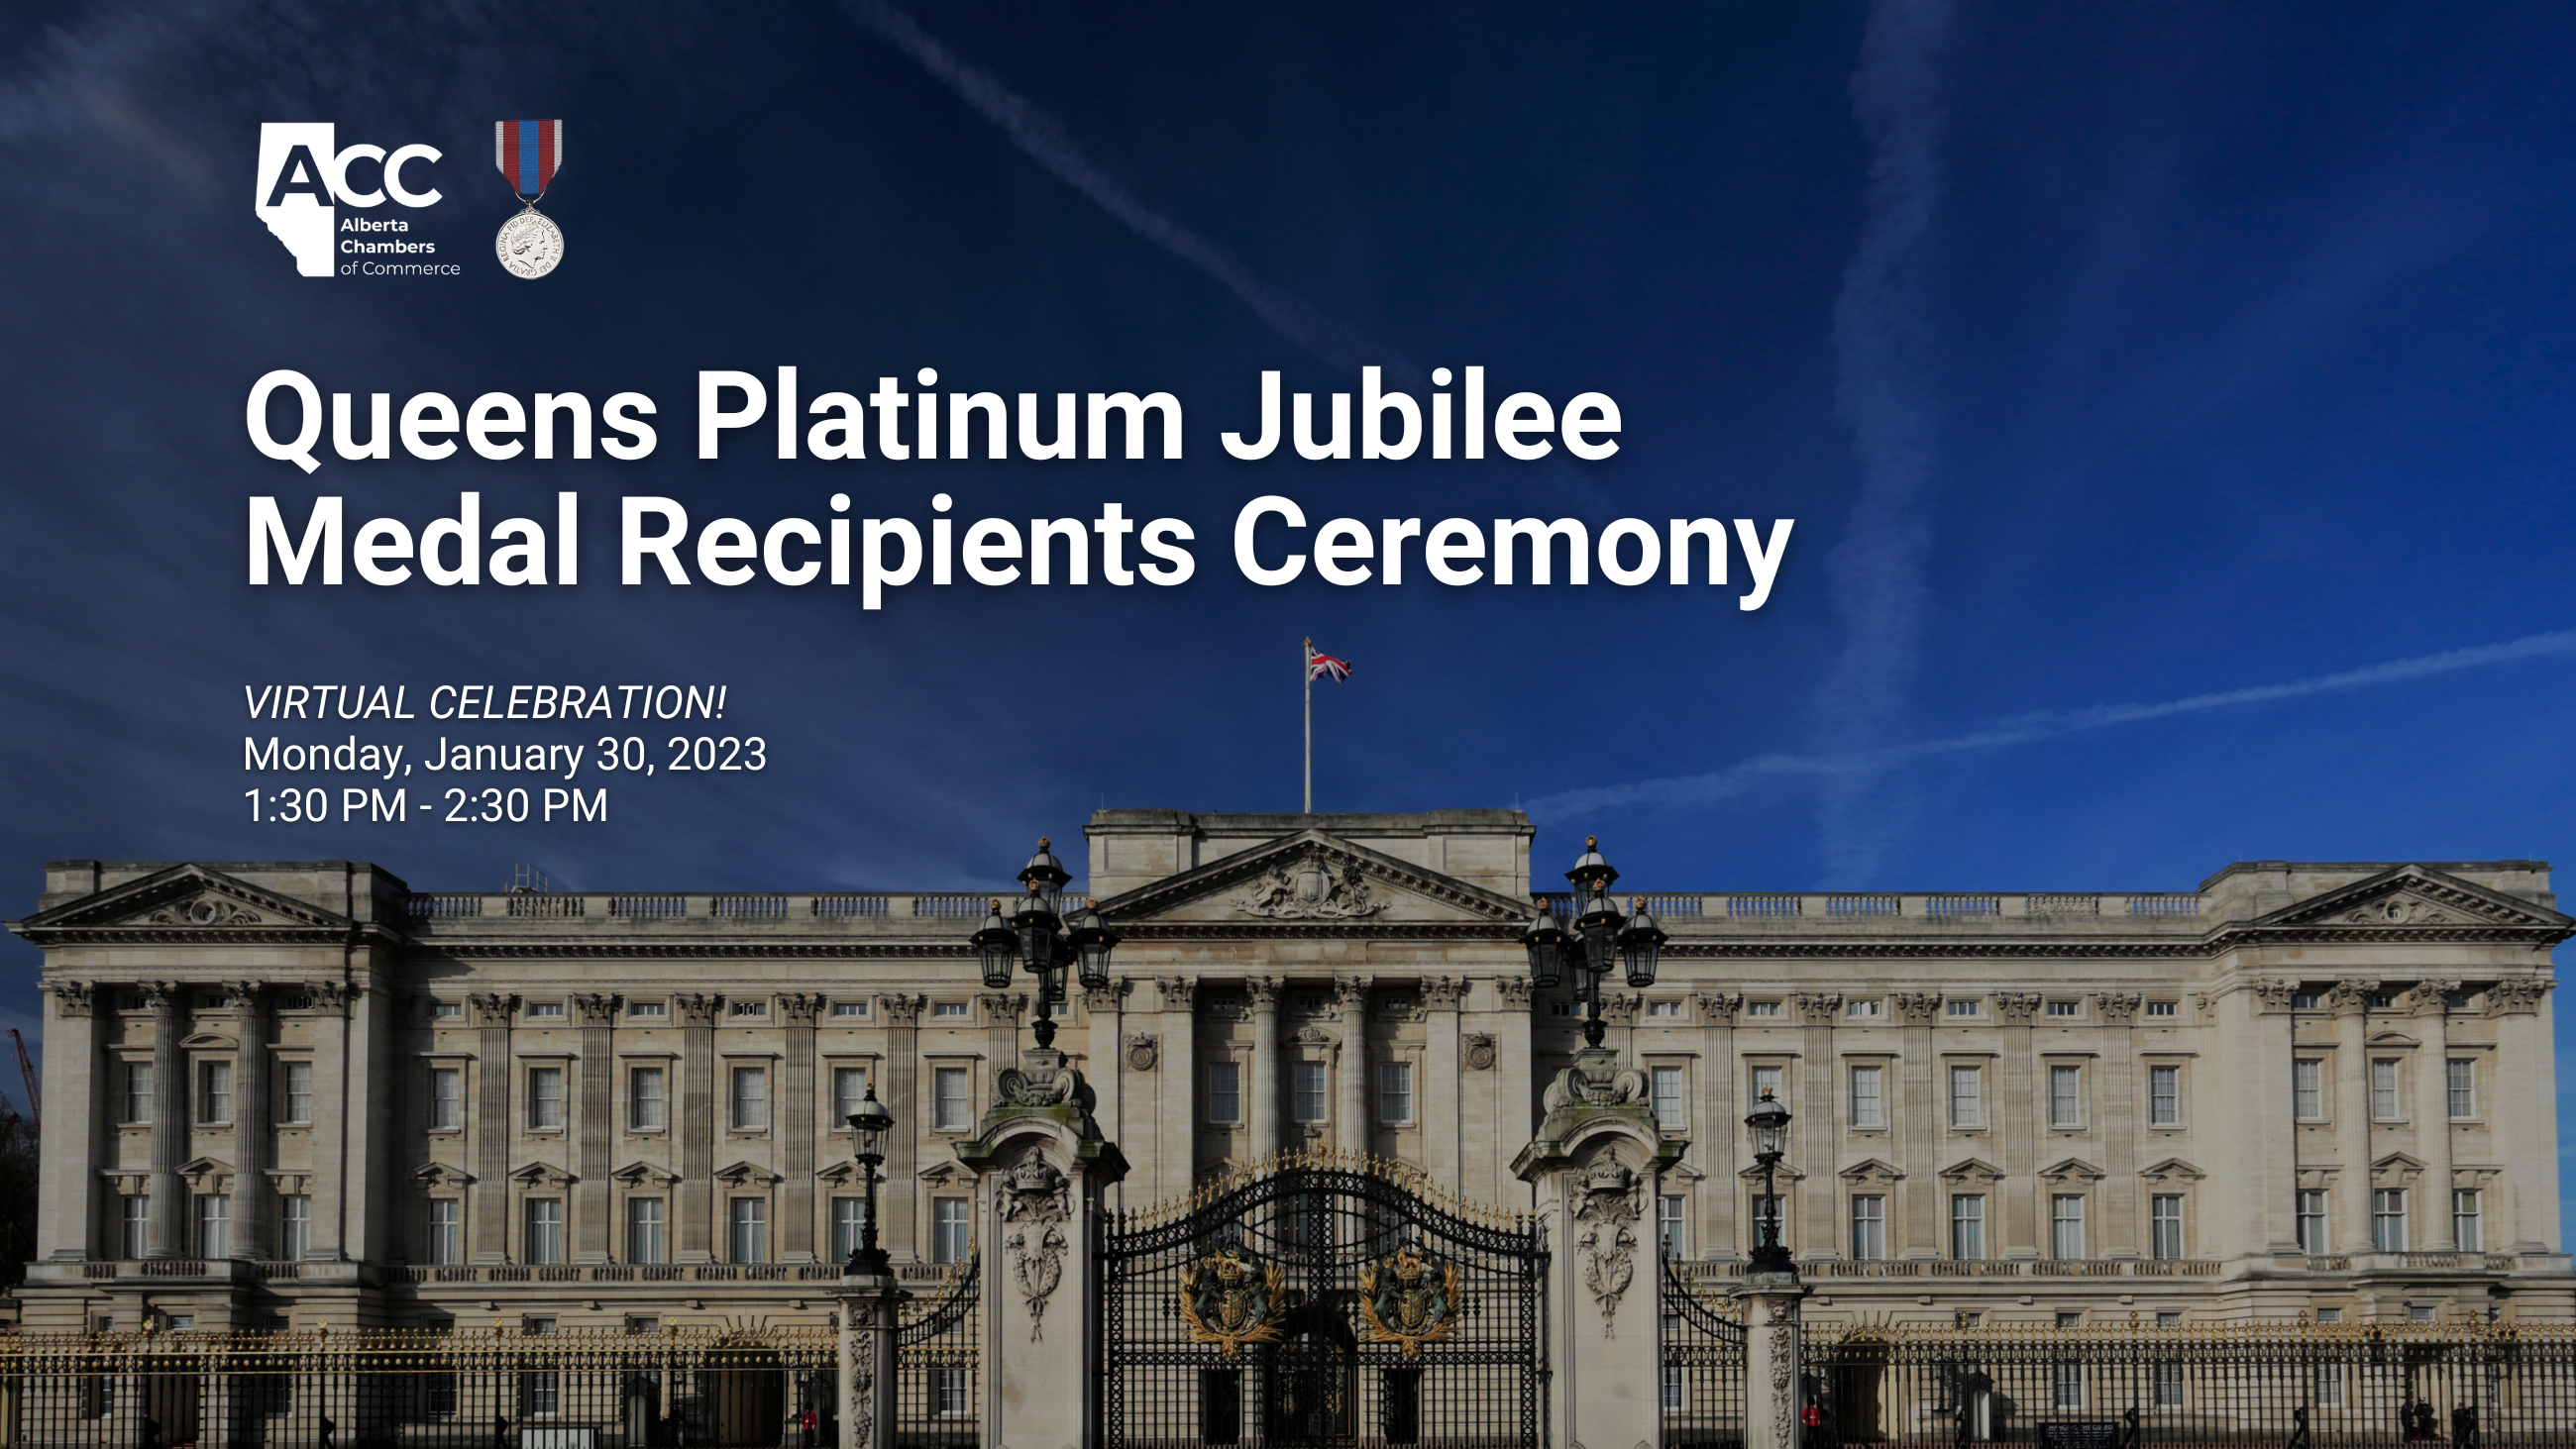 Queens Platinum Jubilee Medal (2168 × 1080 px) (Twitter Post)